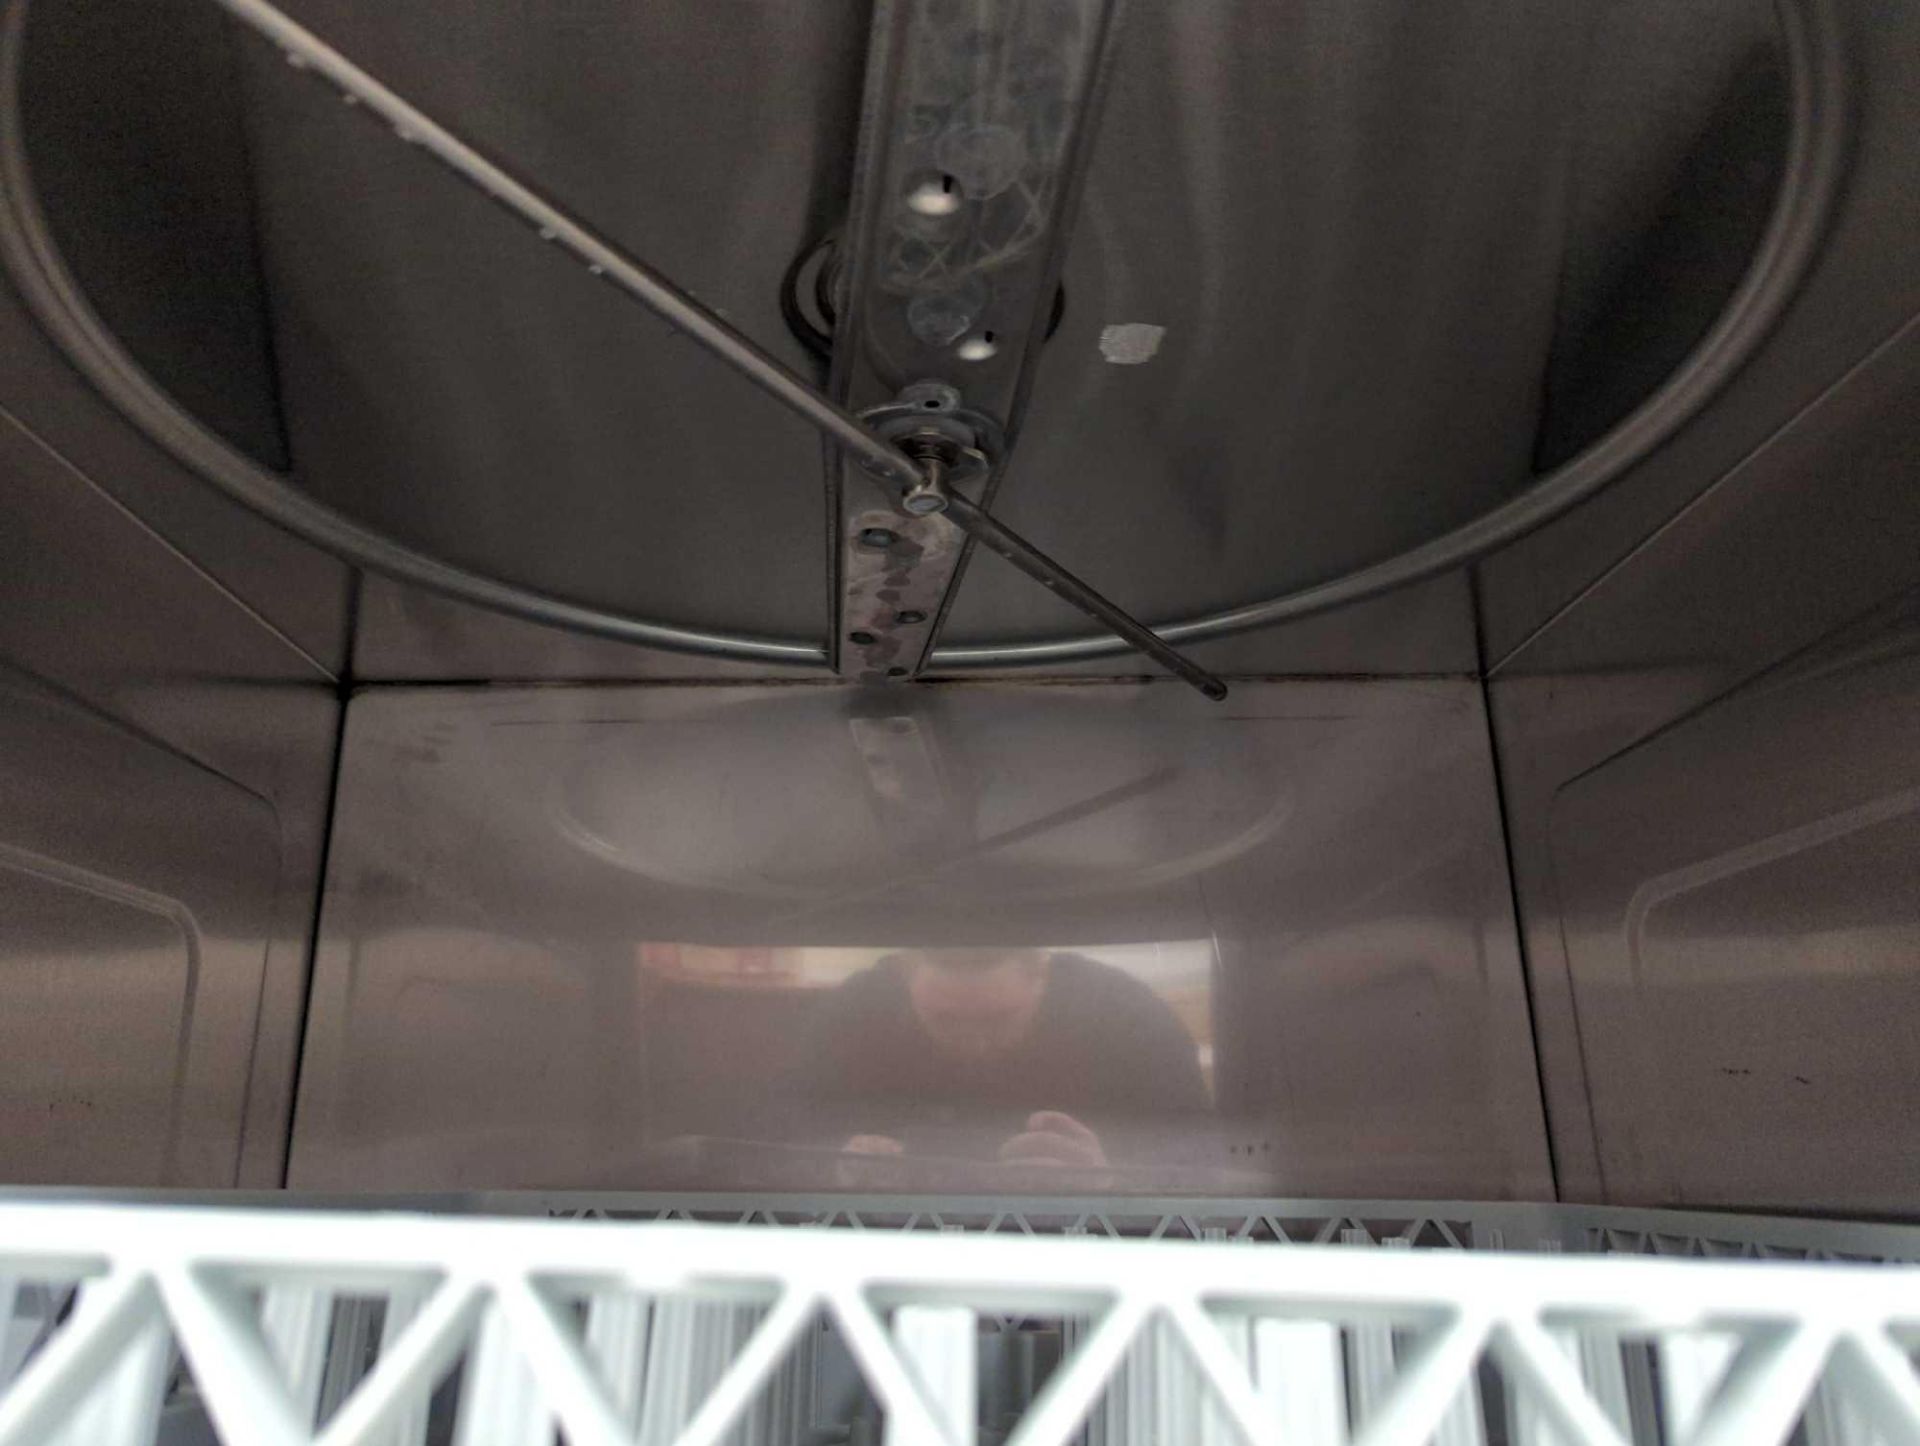 Hobart LXi-H stainless Steel Hot Water Sanitizing Dishwasher - Image 9 of 9